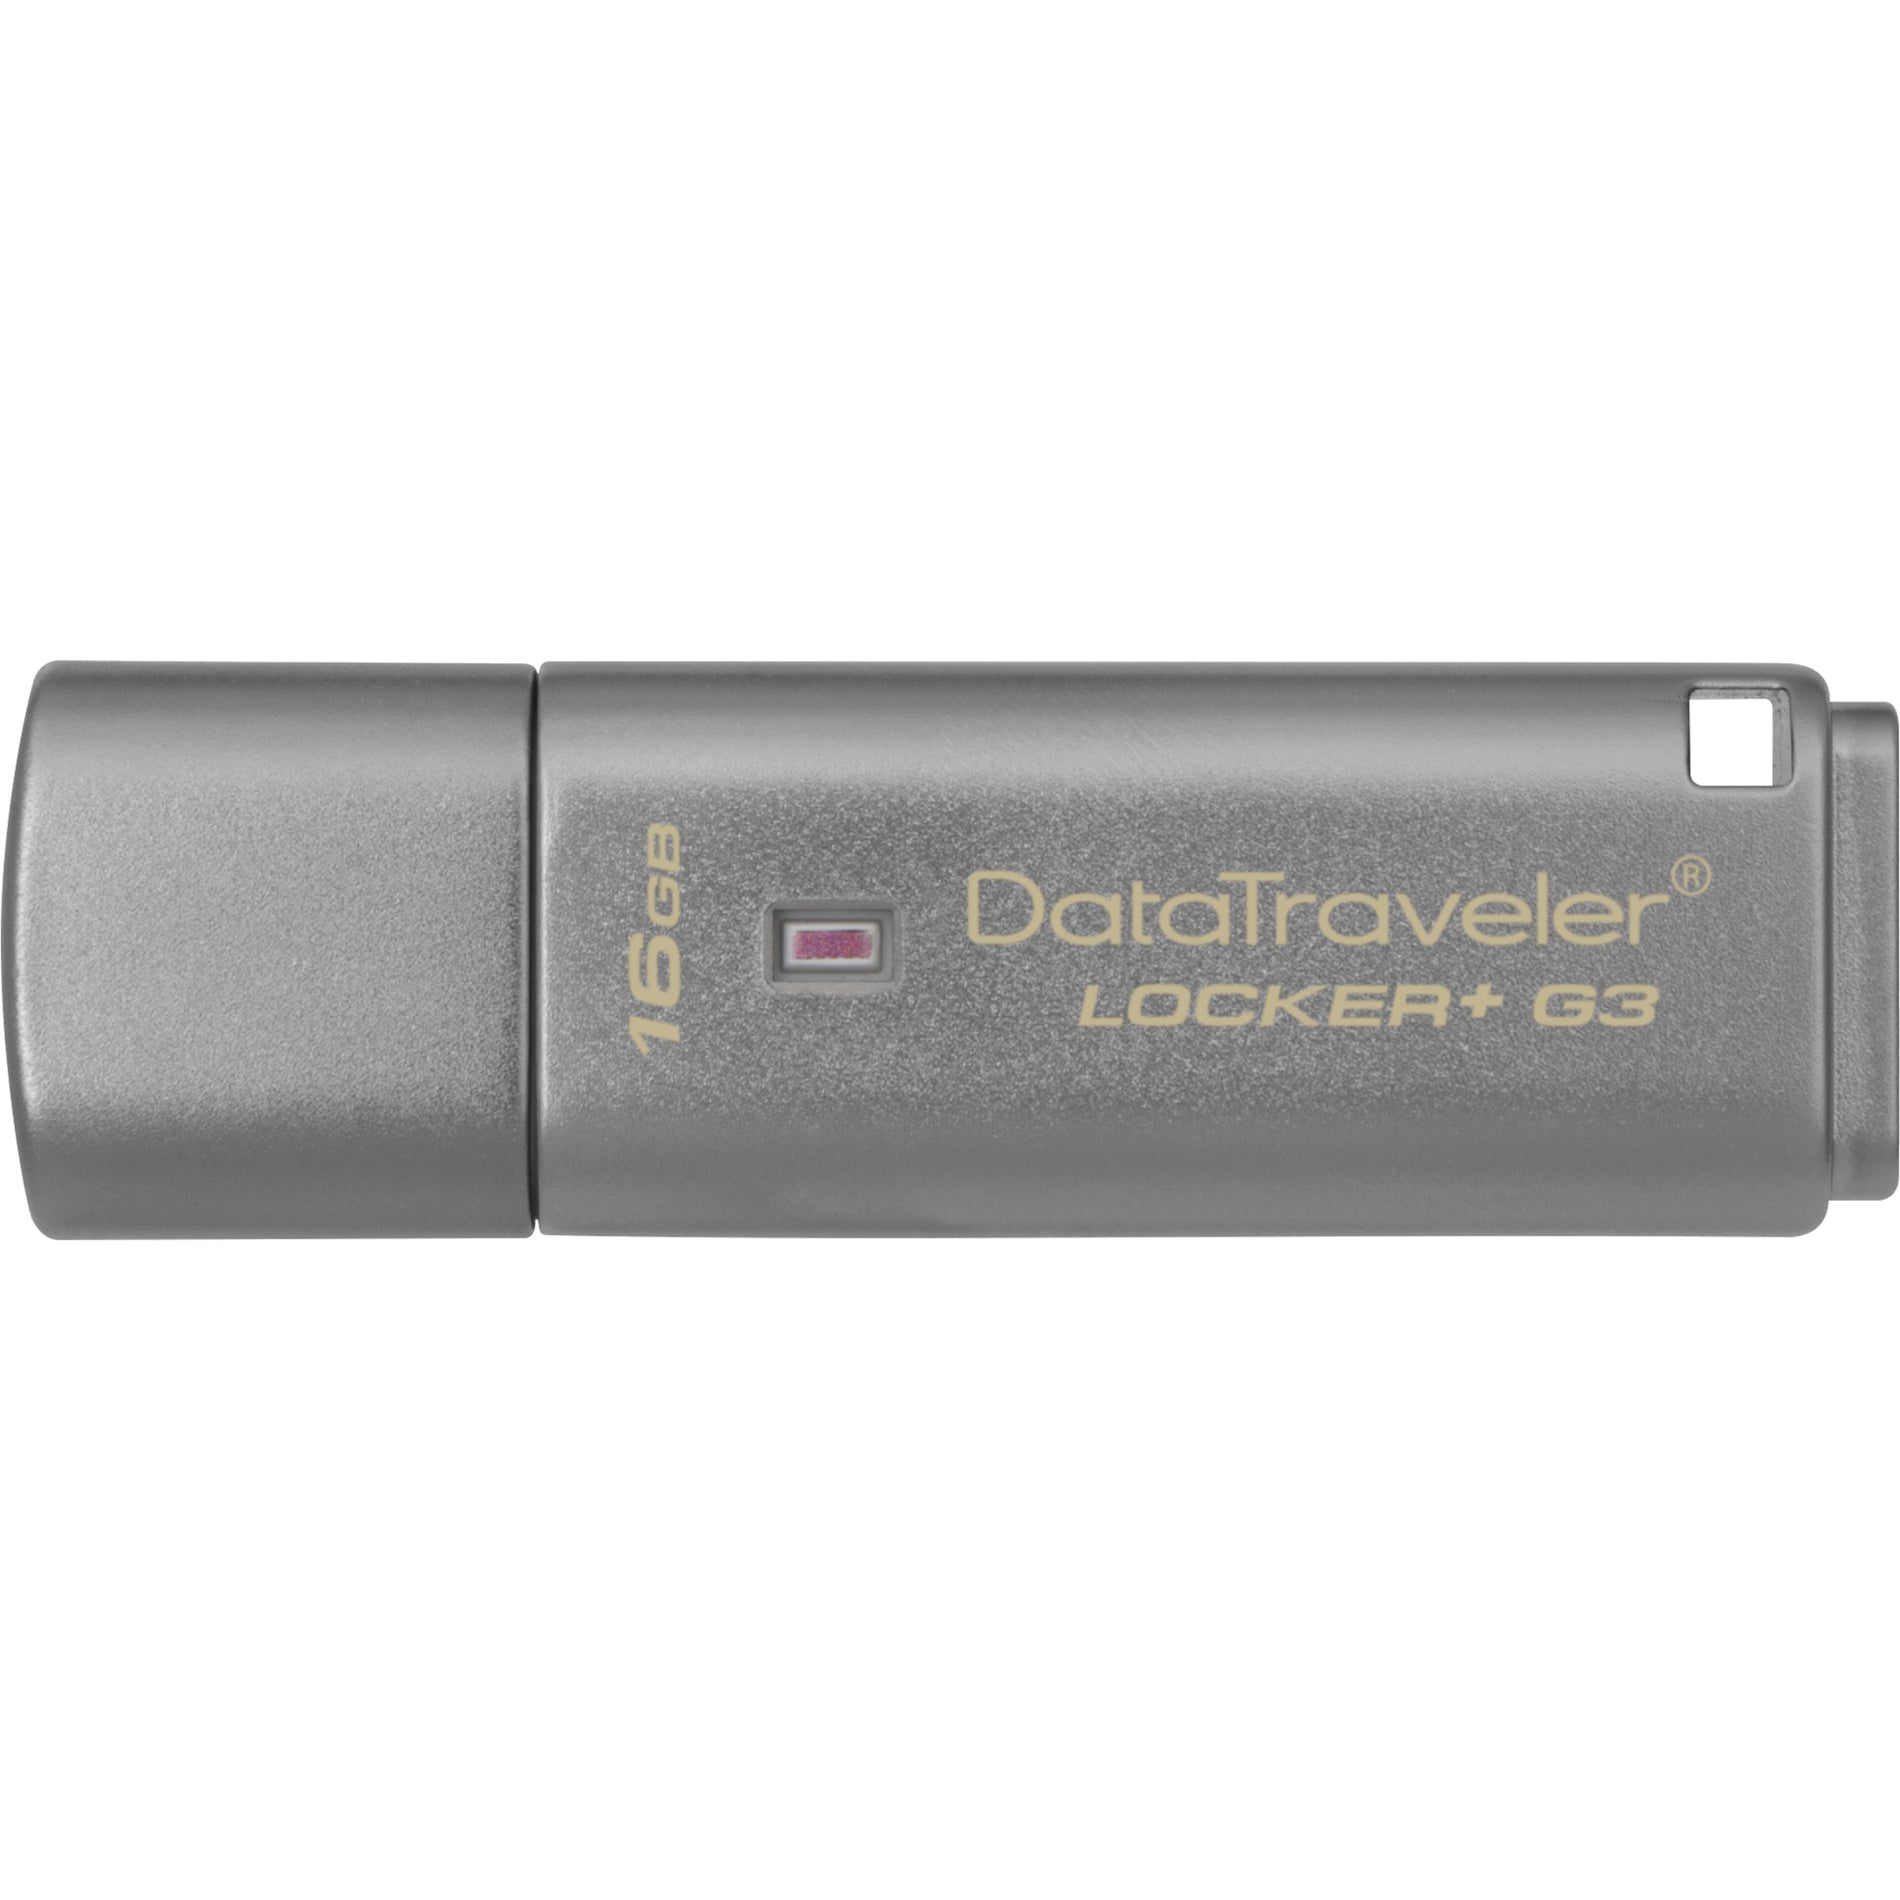 Kingston DTLPG3/16GB DataTraveler Locker+ G3 USB 3.0 Flash Drive, 16GB, Password Protection, Silver